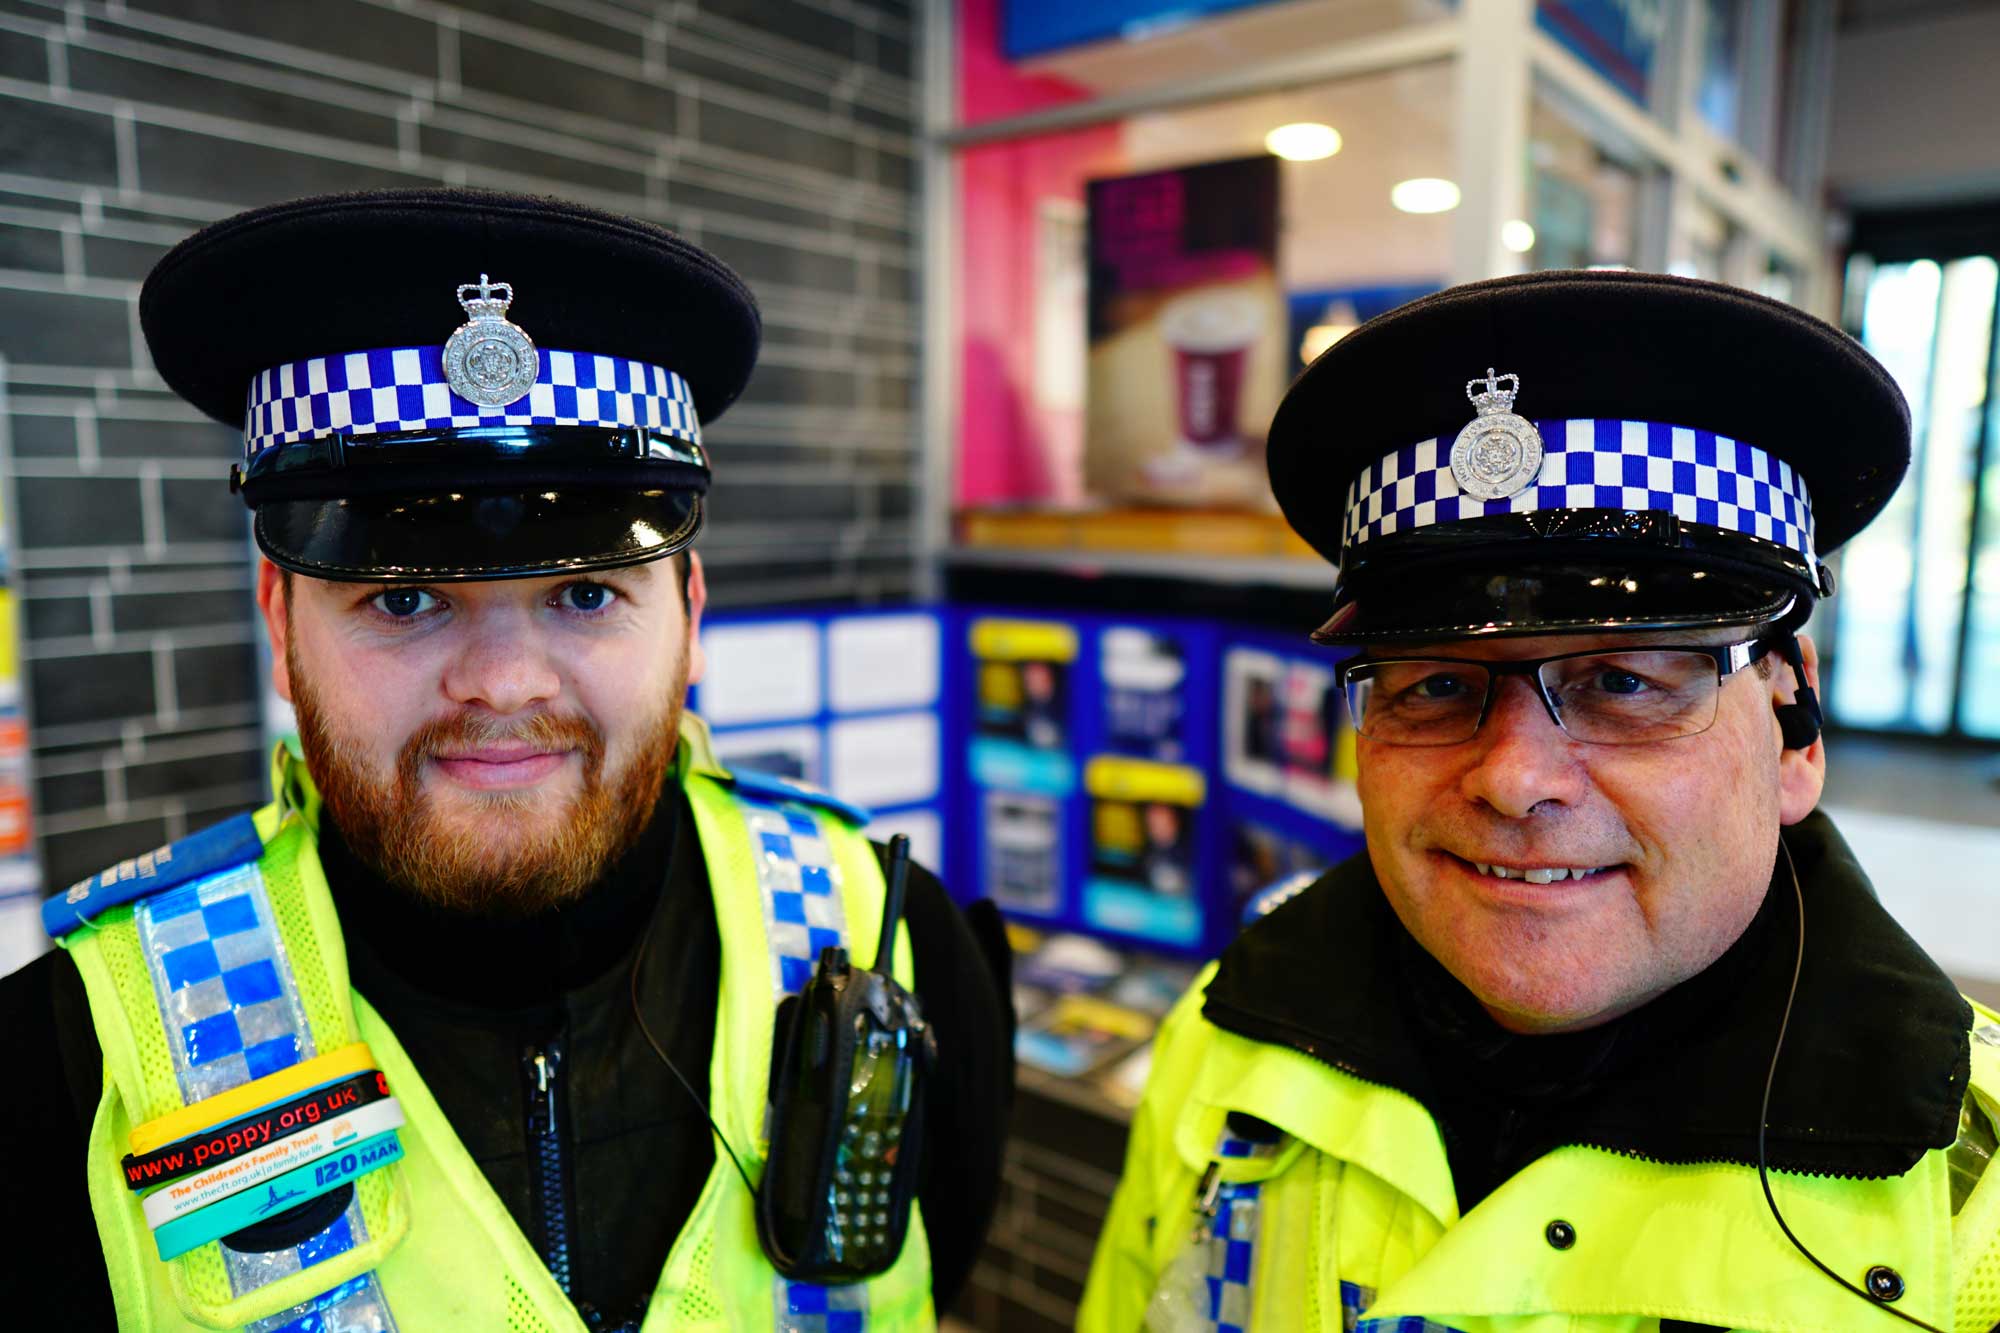 North Yorkshire Police at Harrogate Railway Station